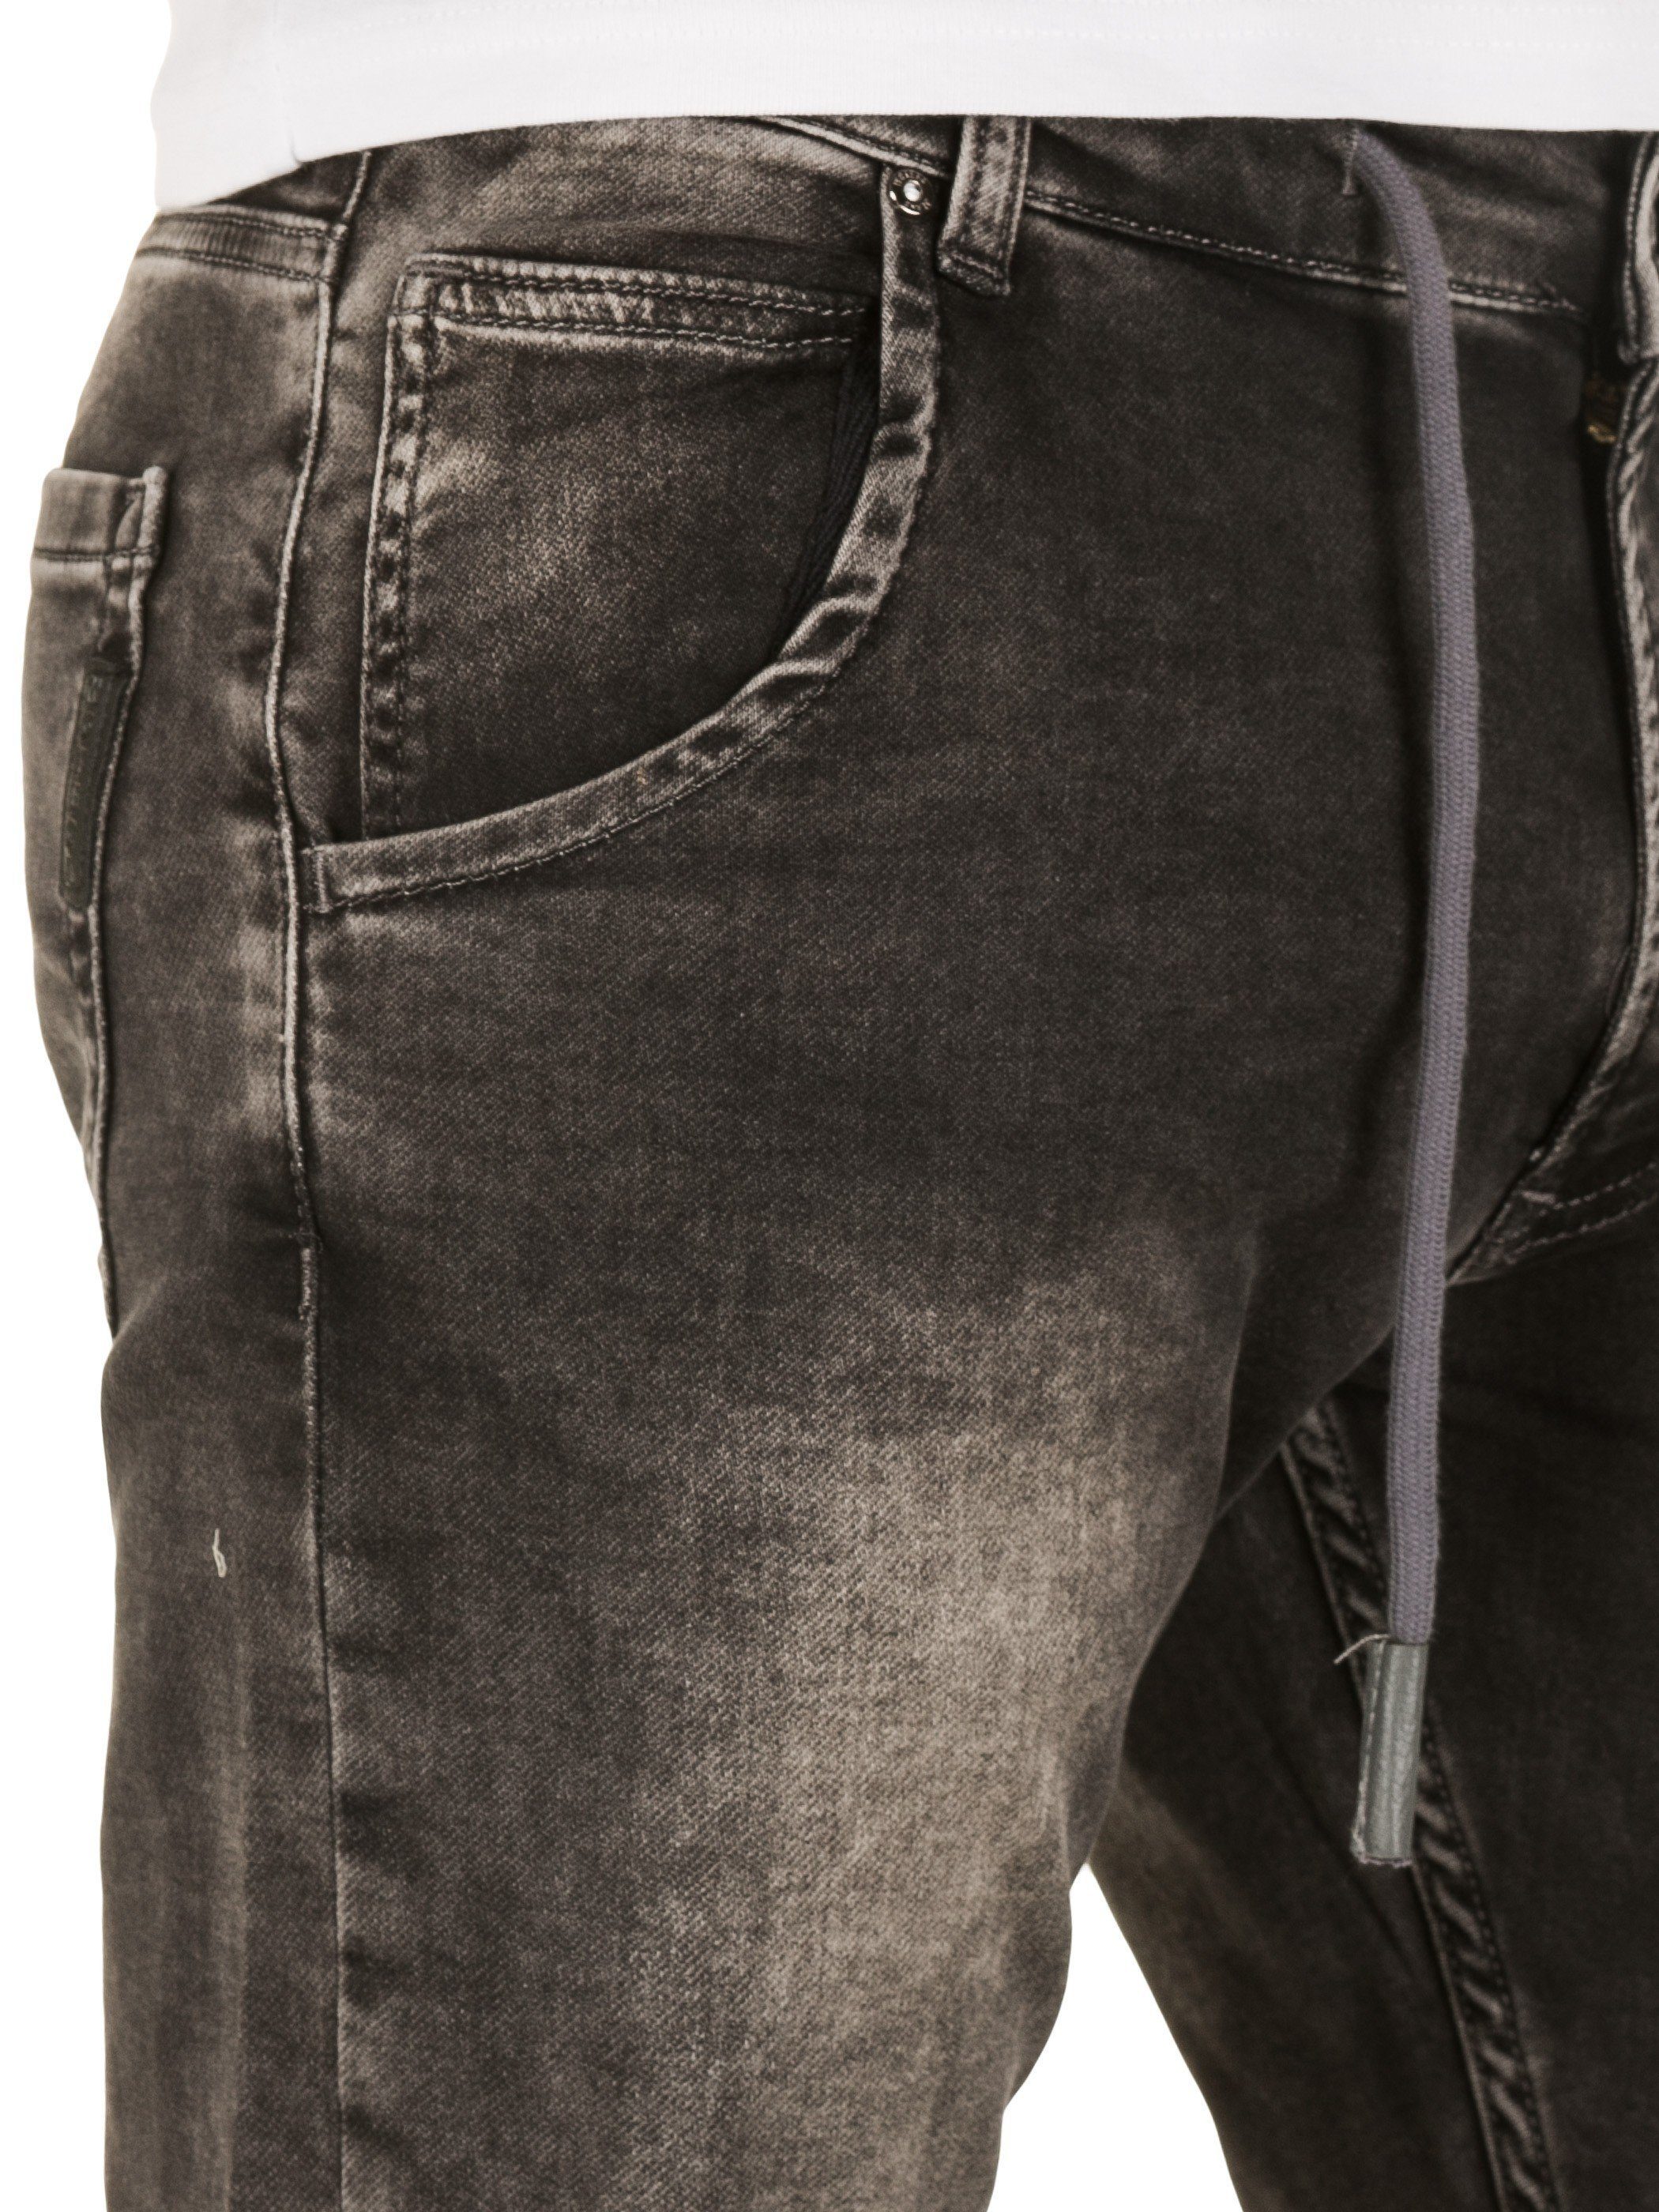 WOTEGA Slim-fit-Jeans Herren Jogginghose in Hose grey Grau Jeans in 19000) Joshua Sweathosen Denim (raven Stretch Jogging Jeans-Look